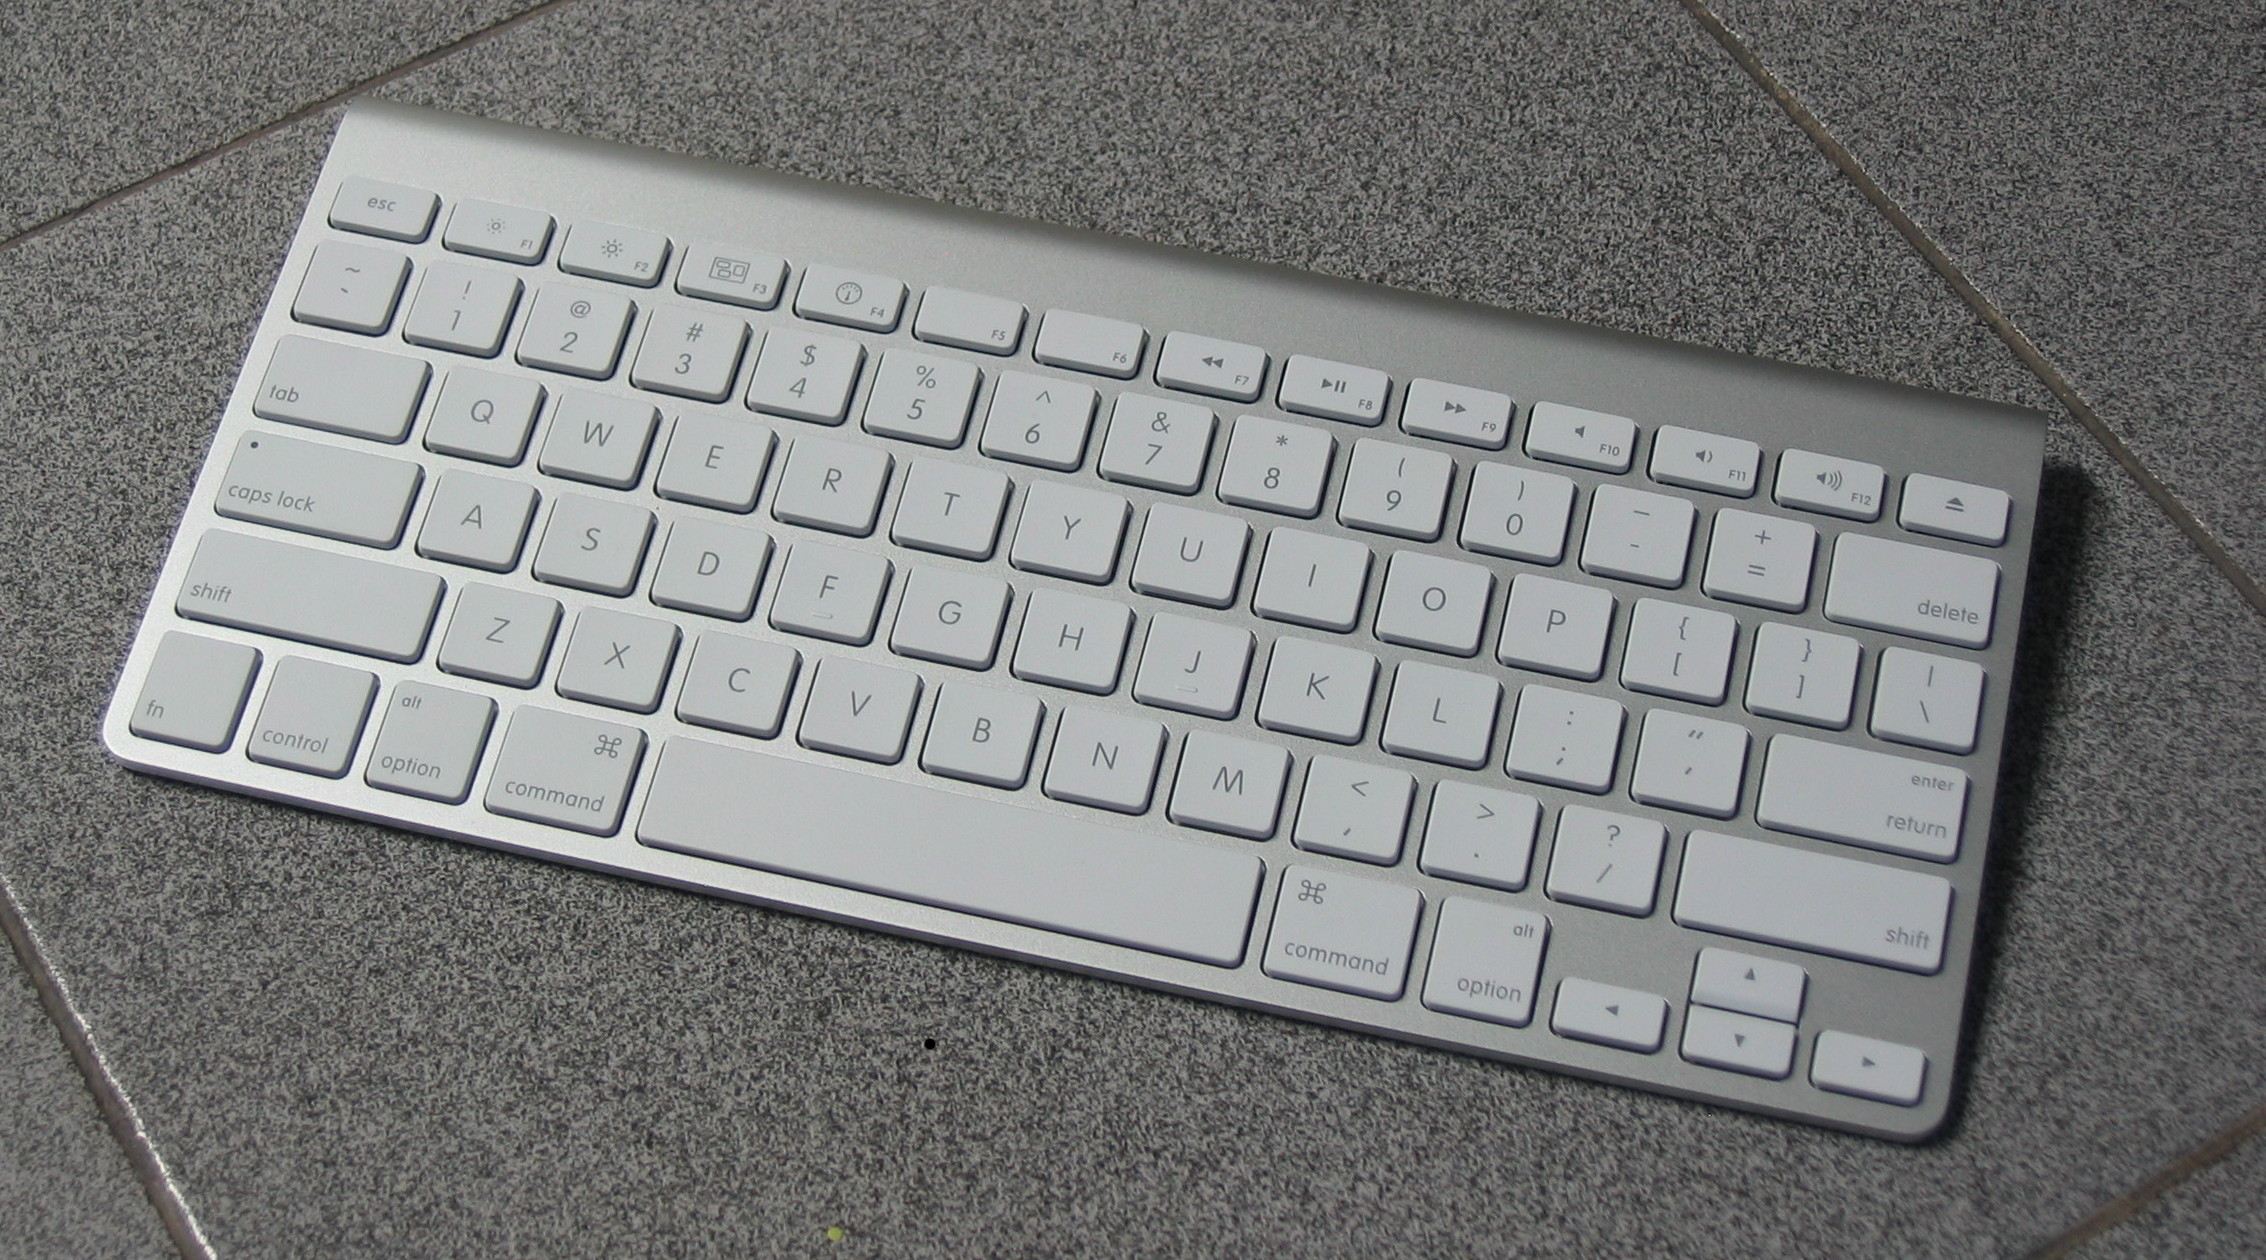 http://fr.academic.ru/pictures/frwiki/65/Apple-wireless-keyboard-aluminum-2007.jpg